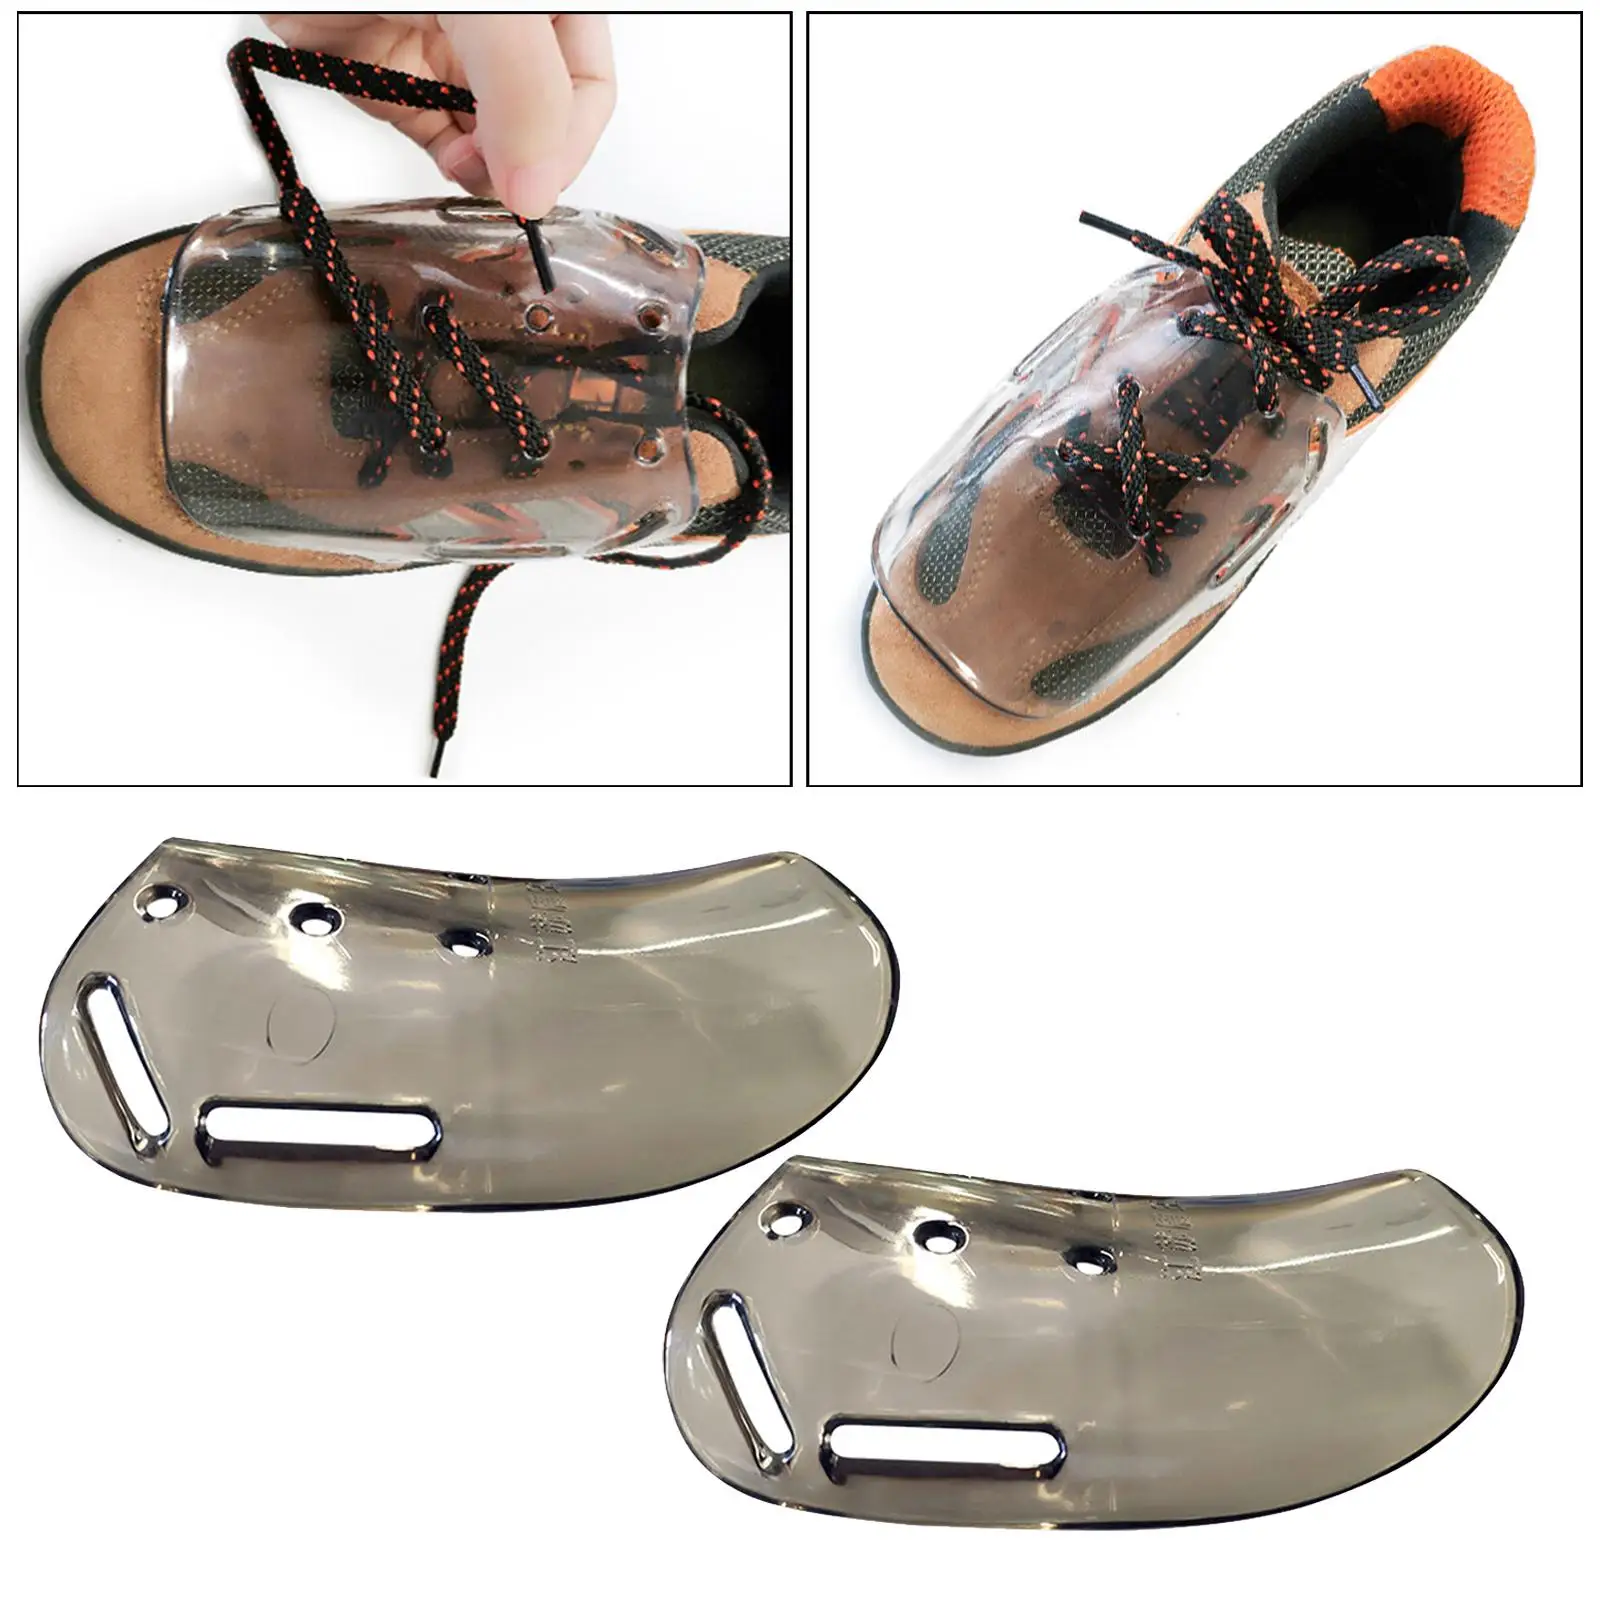 External Metatarsal Guard Footwear Waterproof Fireproof Attachment Welder Cover for Construction Falling Objects